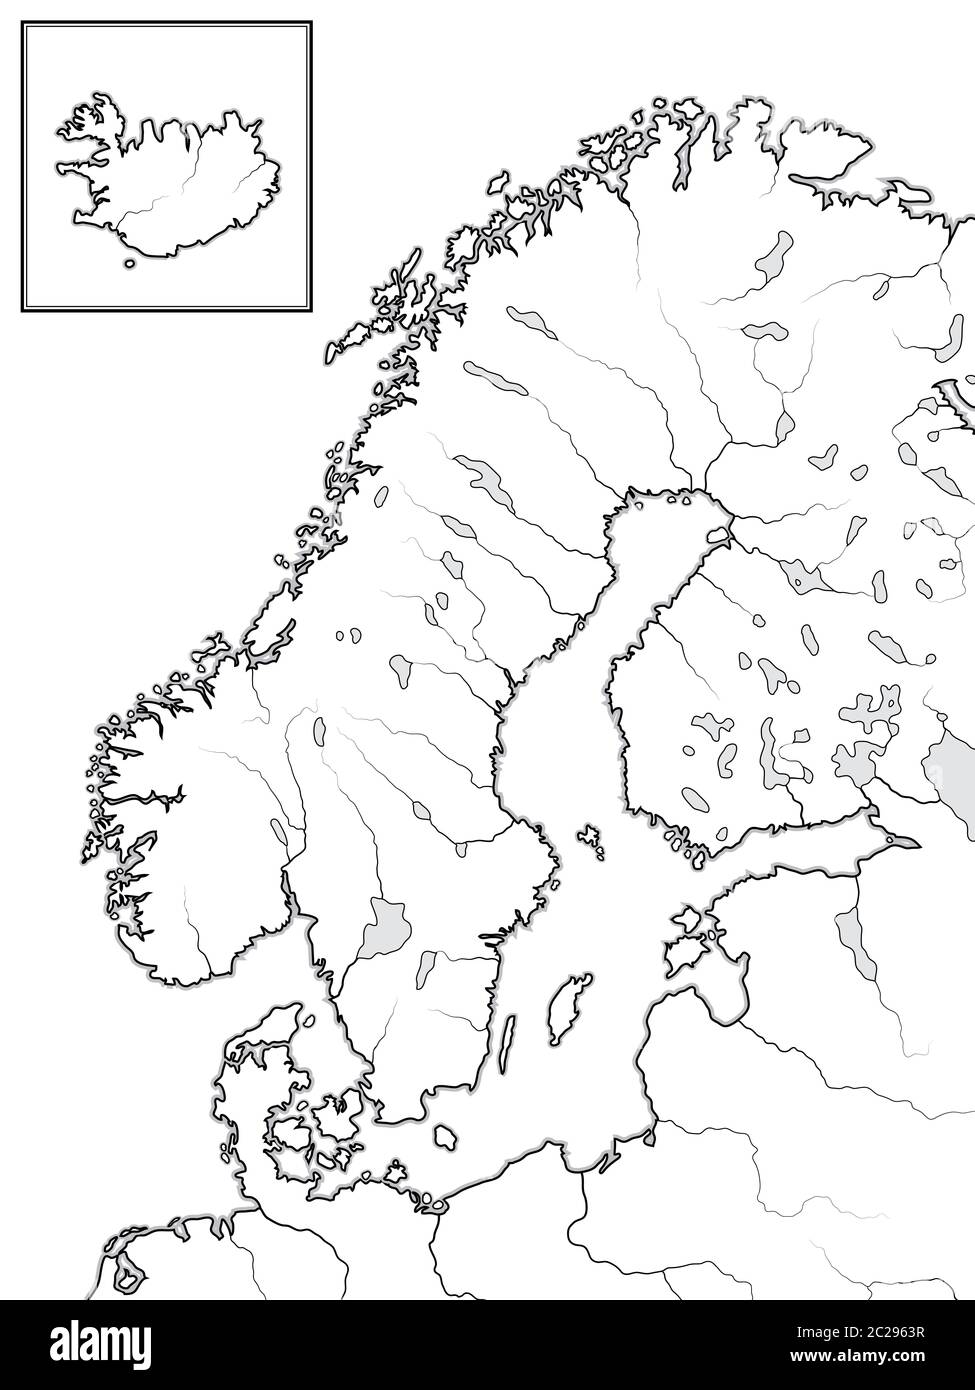 Carte Des Pays Scandinaves Scandinavie Suede Norvege Finlande Danemark Et Islande Carte Geographique Photo Stock Alamy